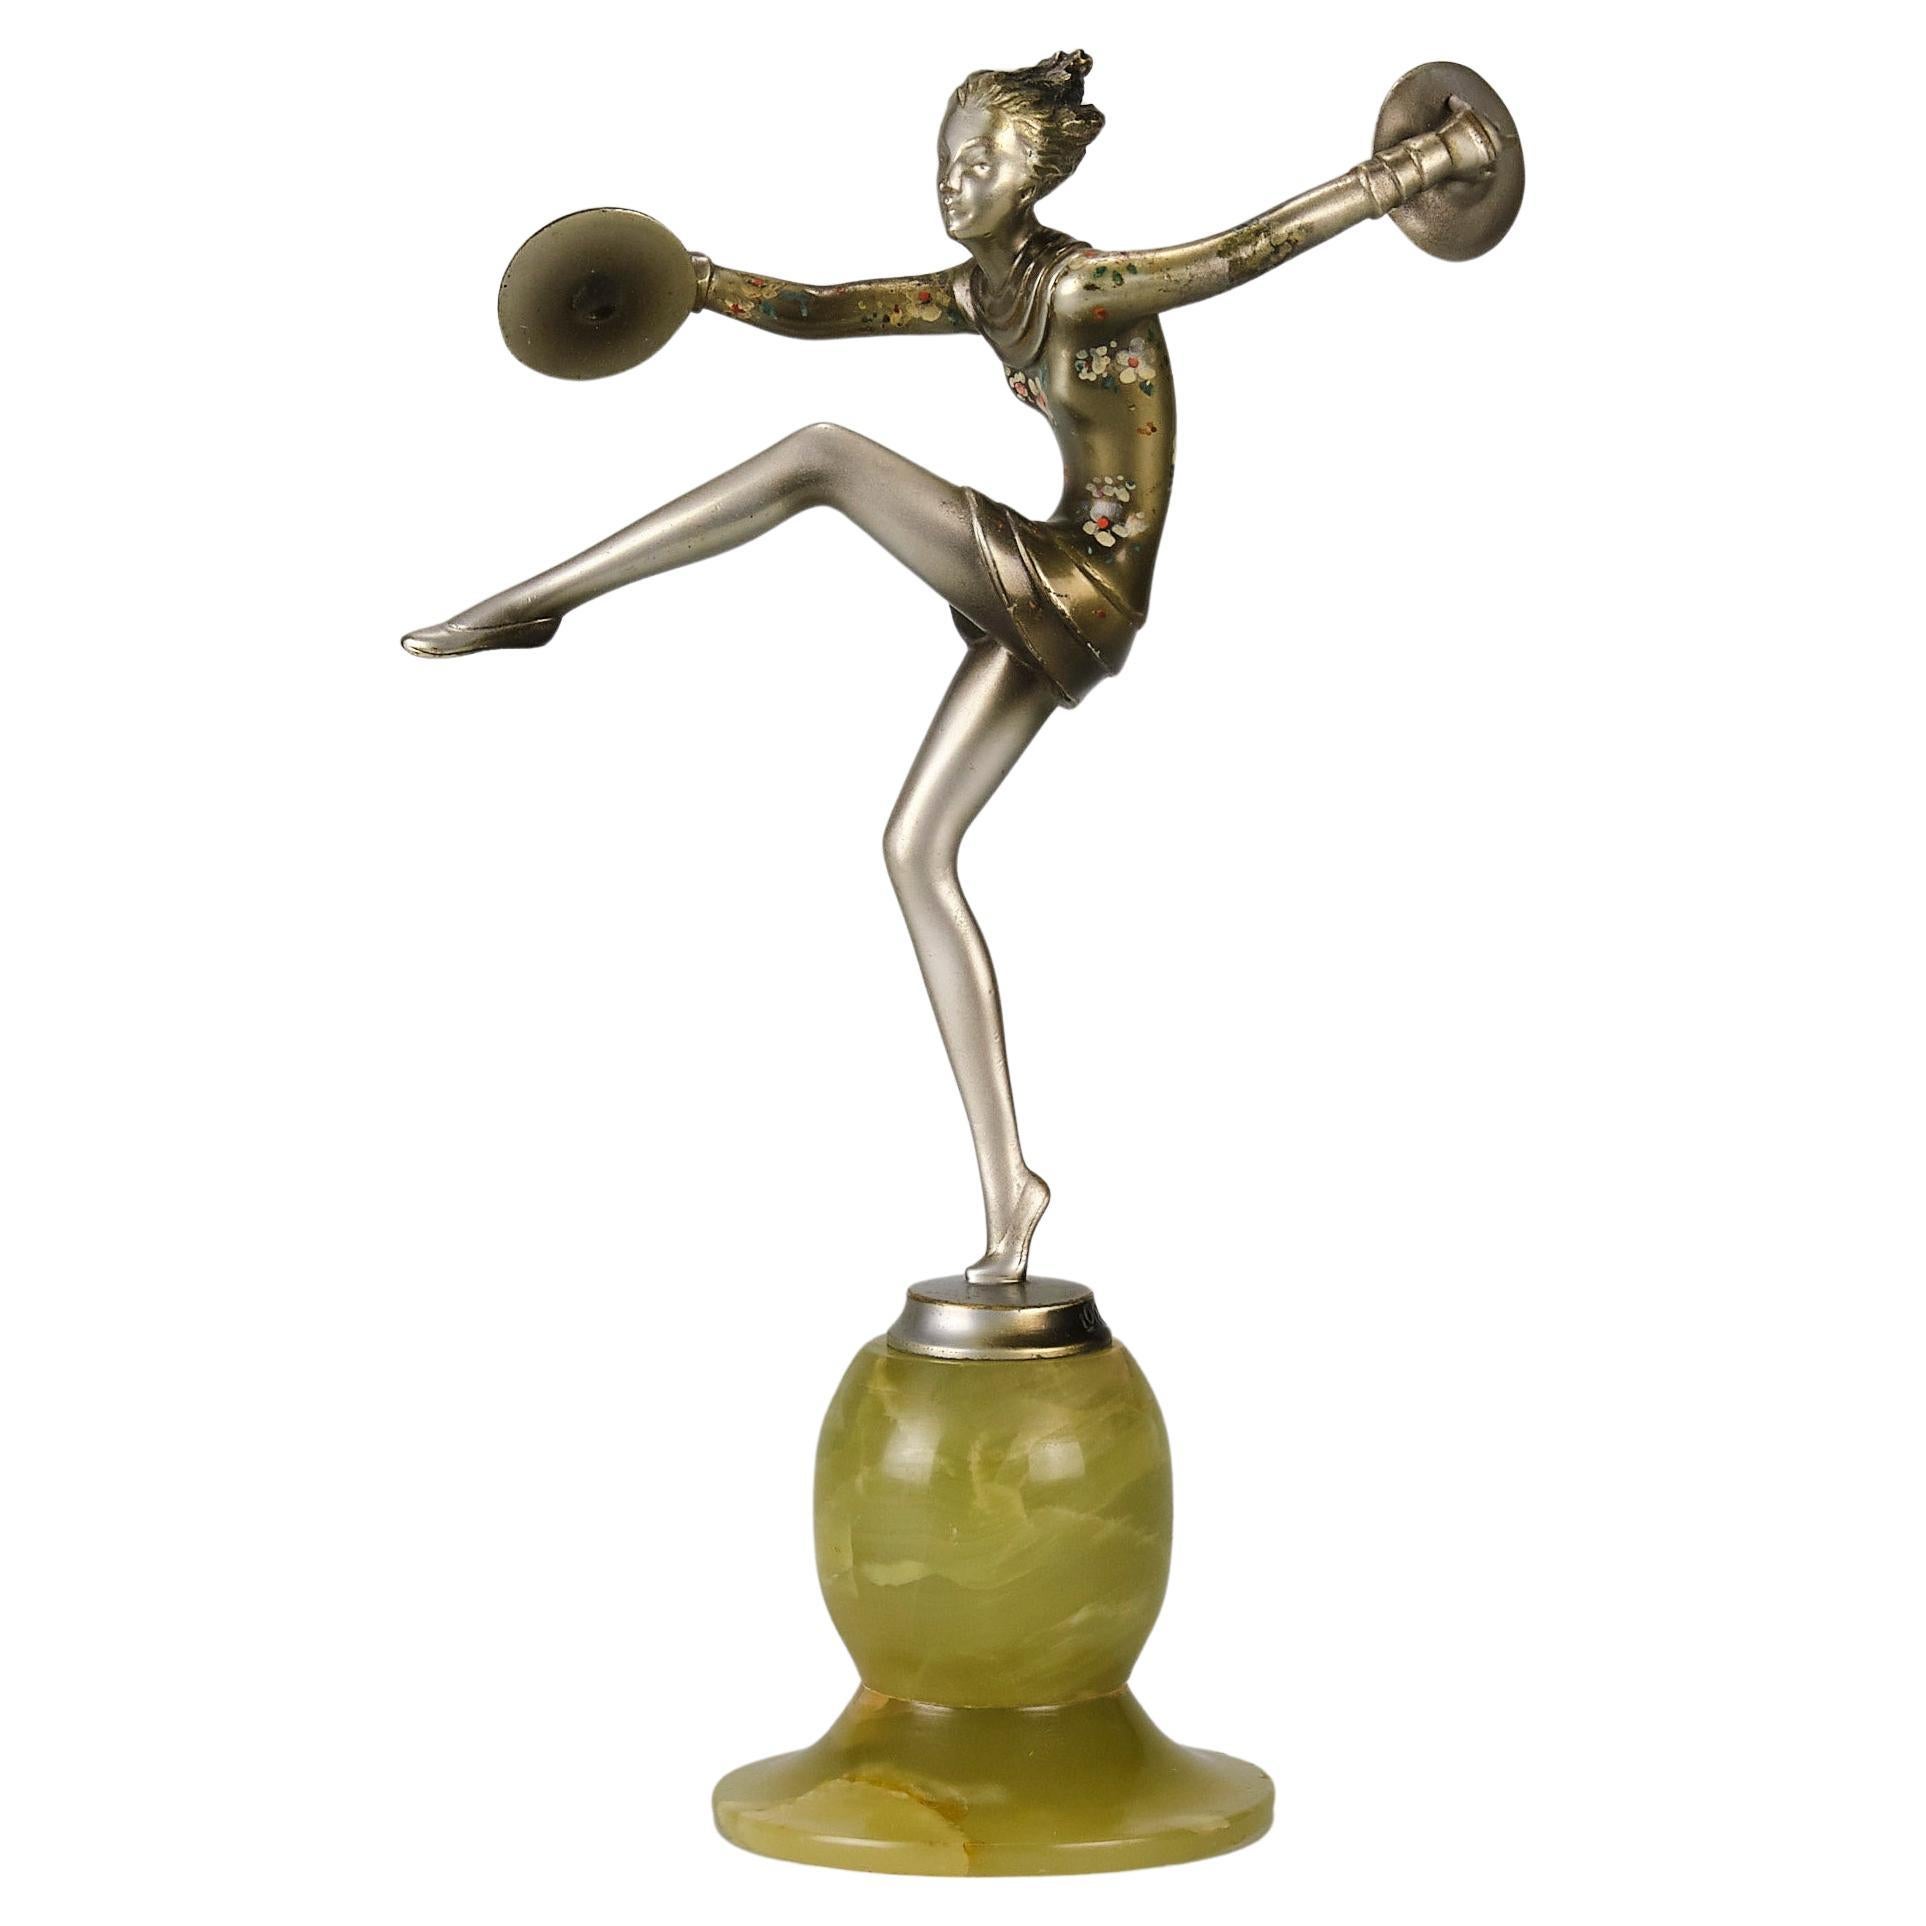 Early 20th Century Art Deco Bronze entitled "Cymbal Dancer" by Lorenzl & Crejo